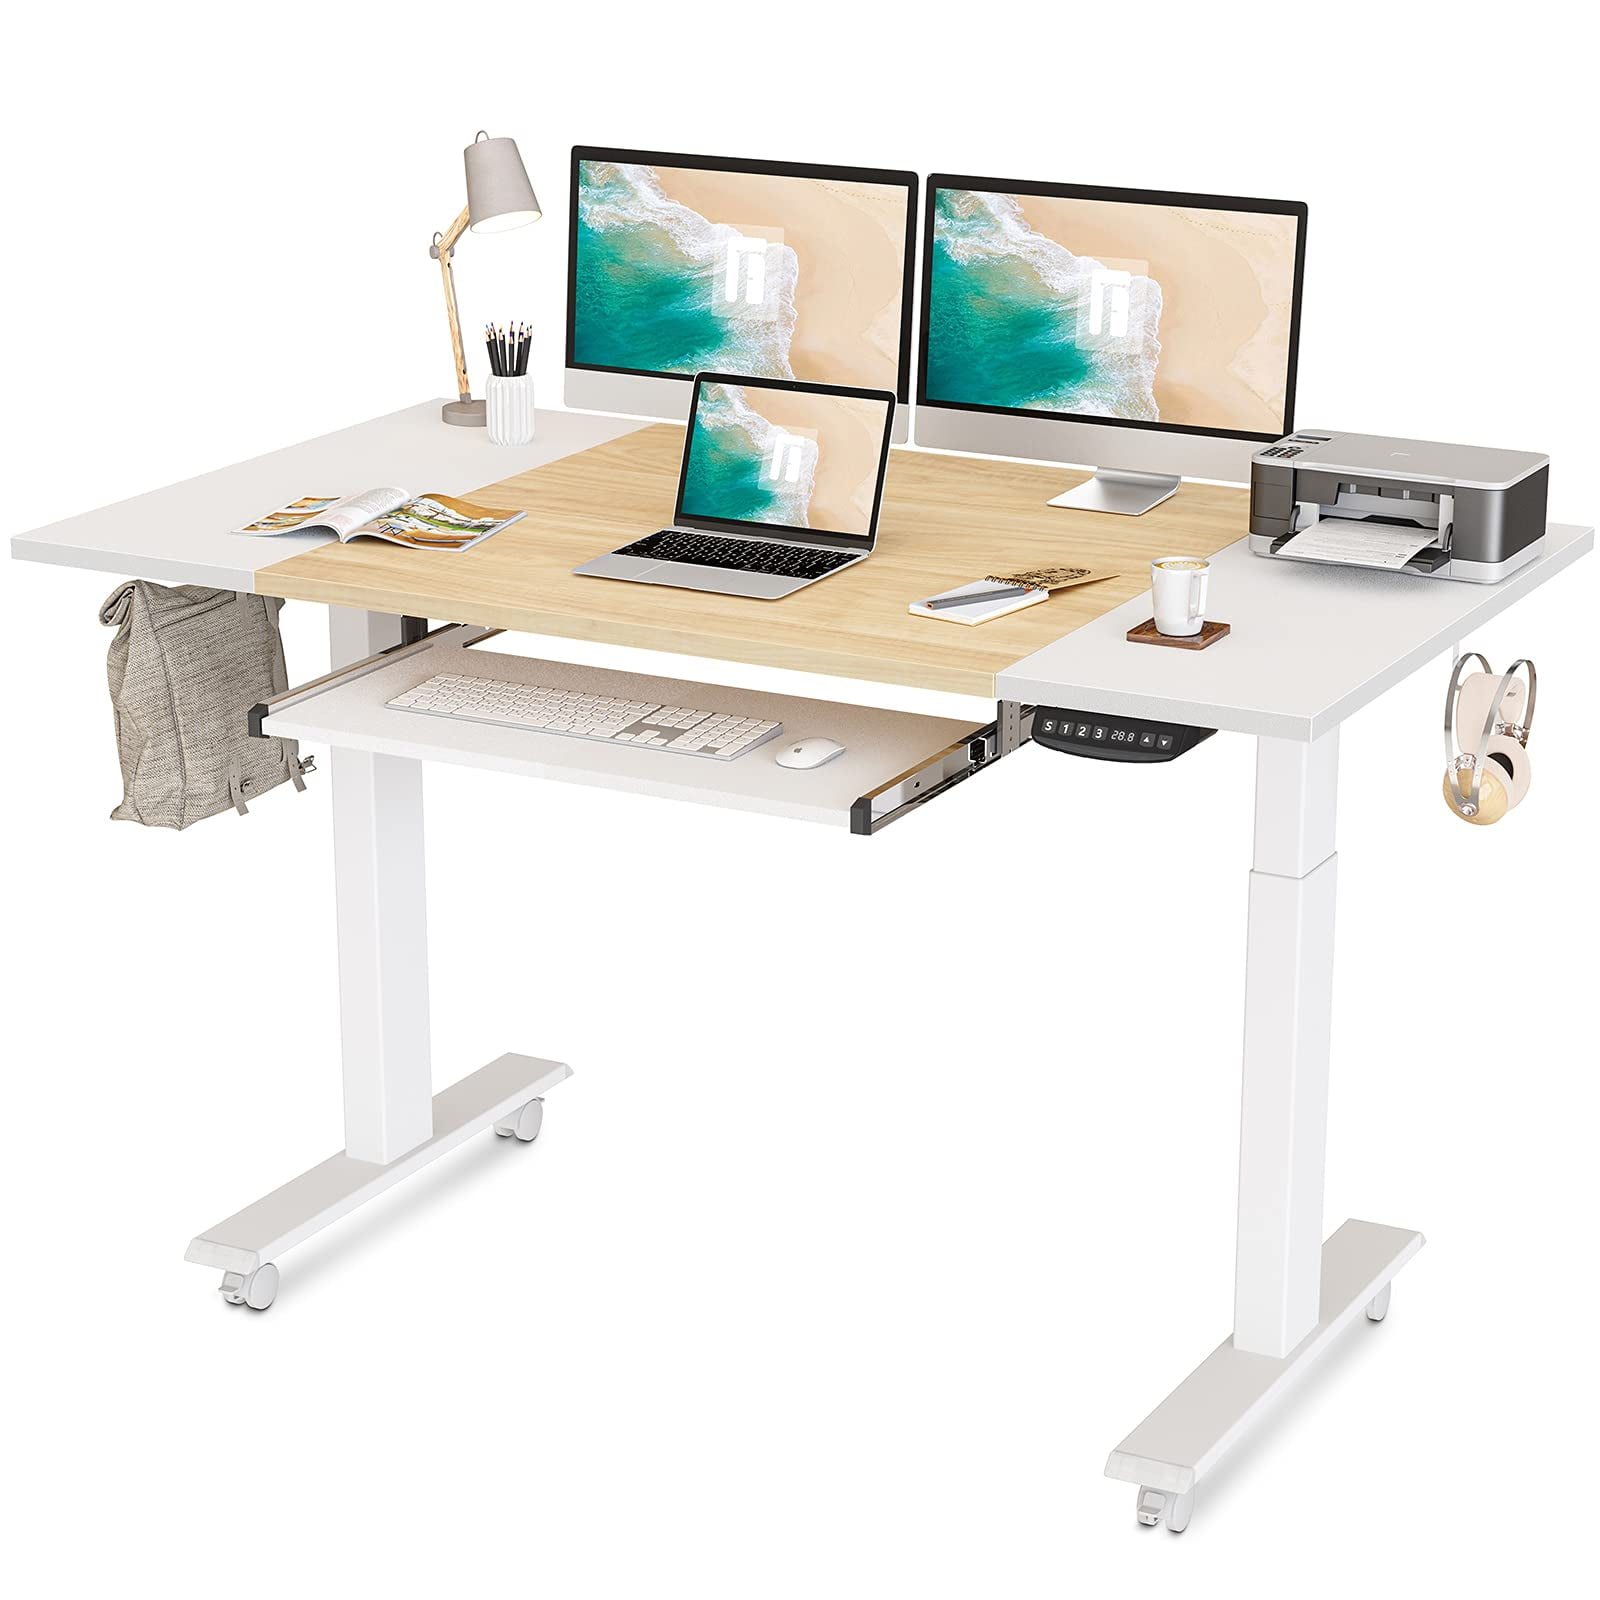 Progressive Products – Progressive Desk